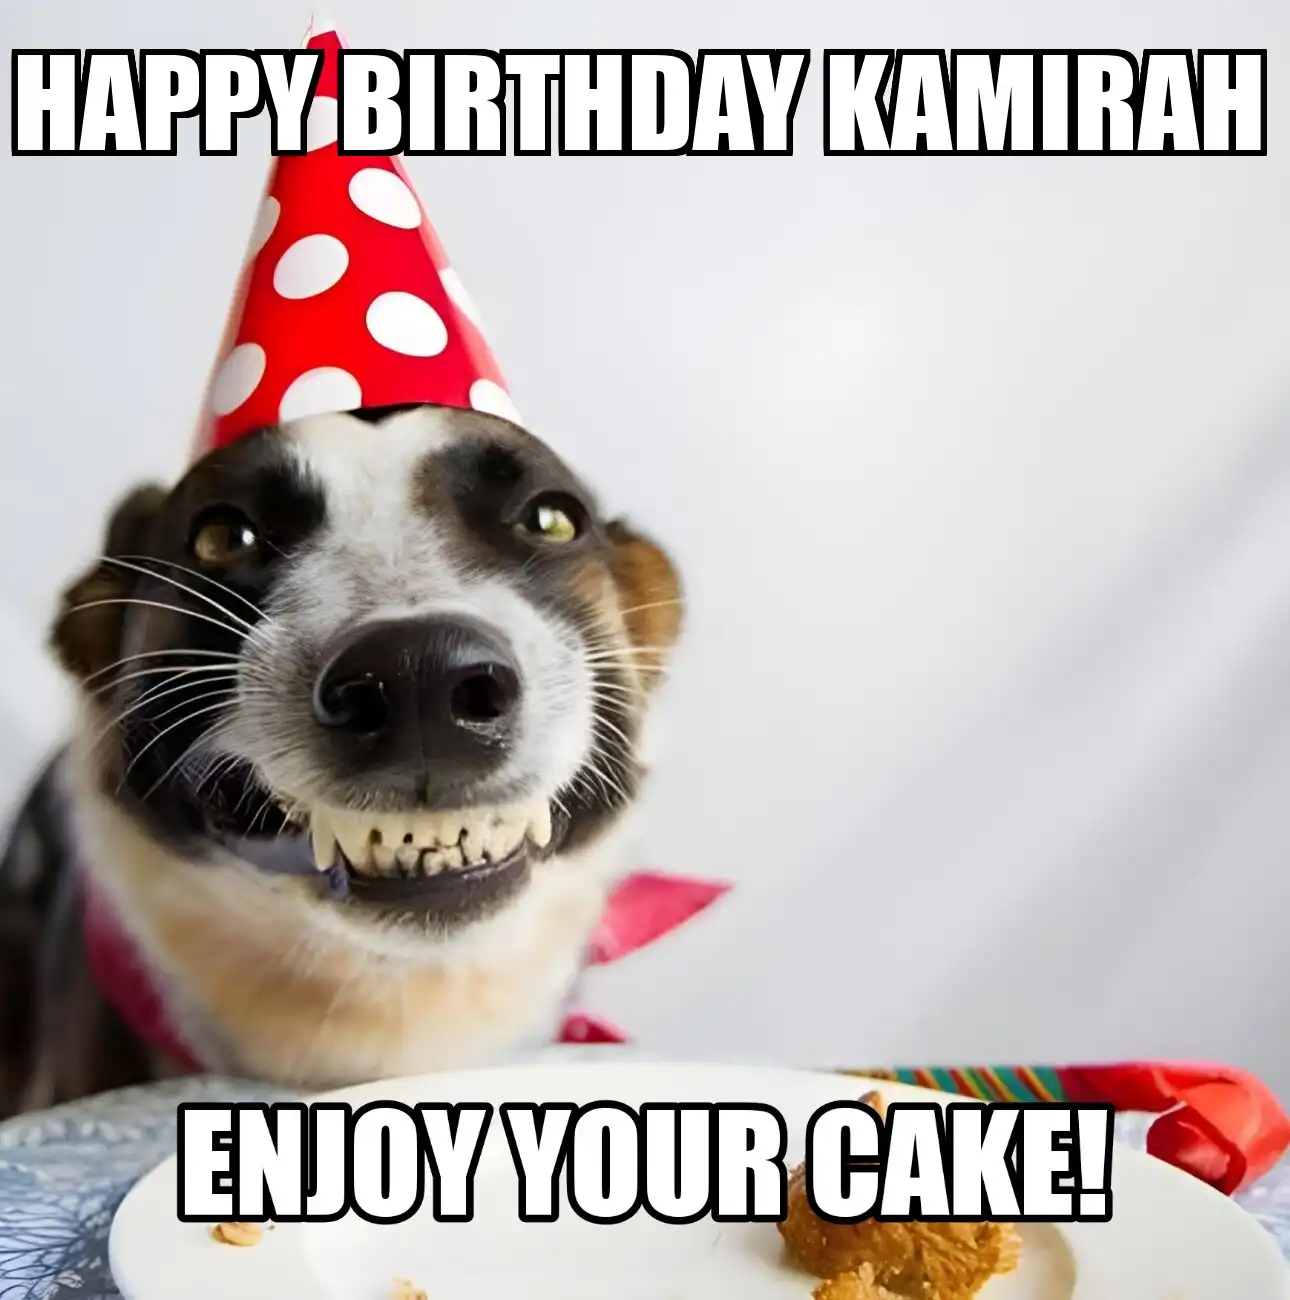 Happy Birthday Kamirah Enjoy Your Cake Dog Meme